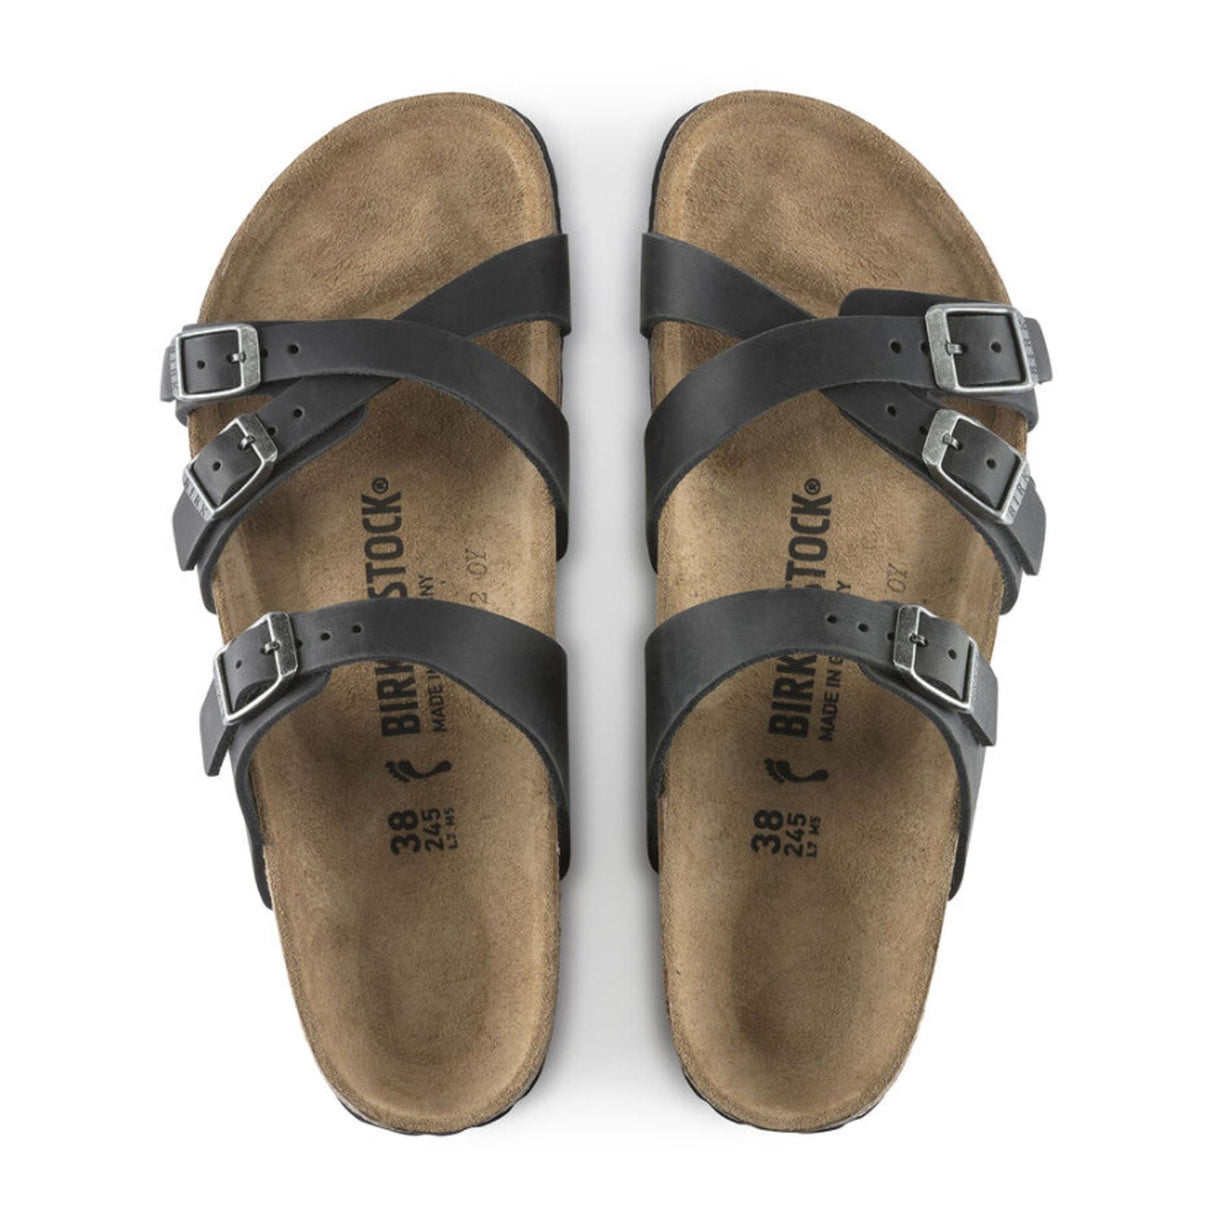 Birkenstock Franca Narrow Slide Sandal (Women) - Black Oiled Leather Sandals - Slide - The Heel Shoe Fitters